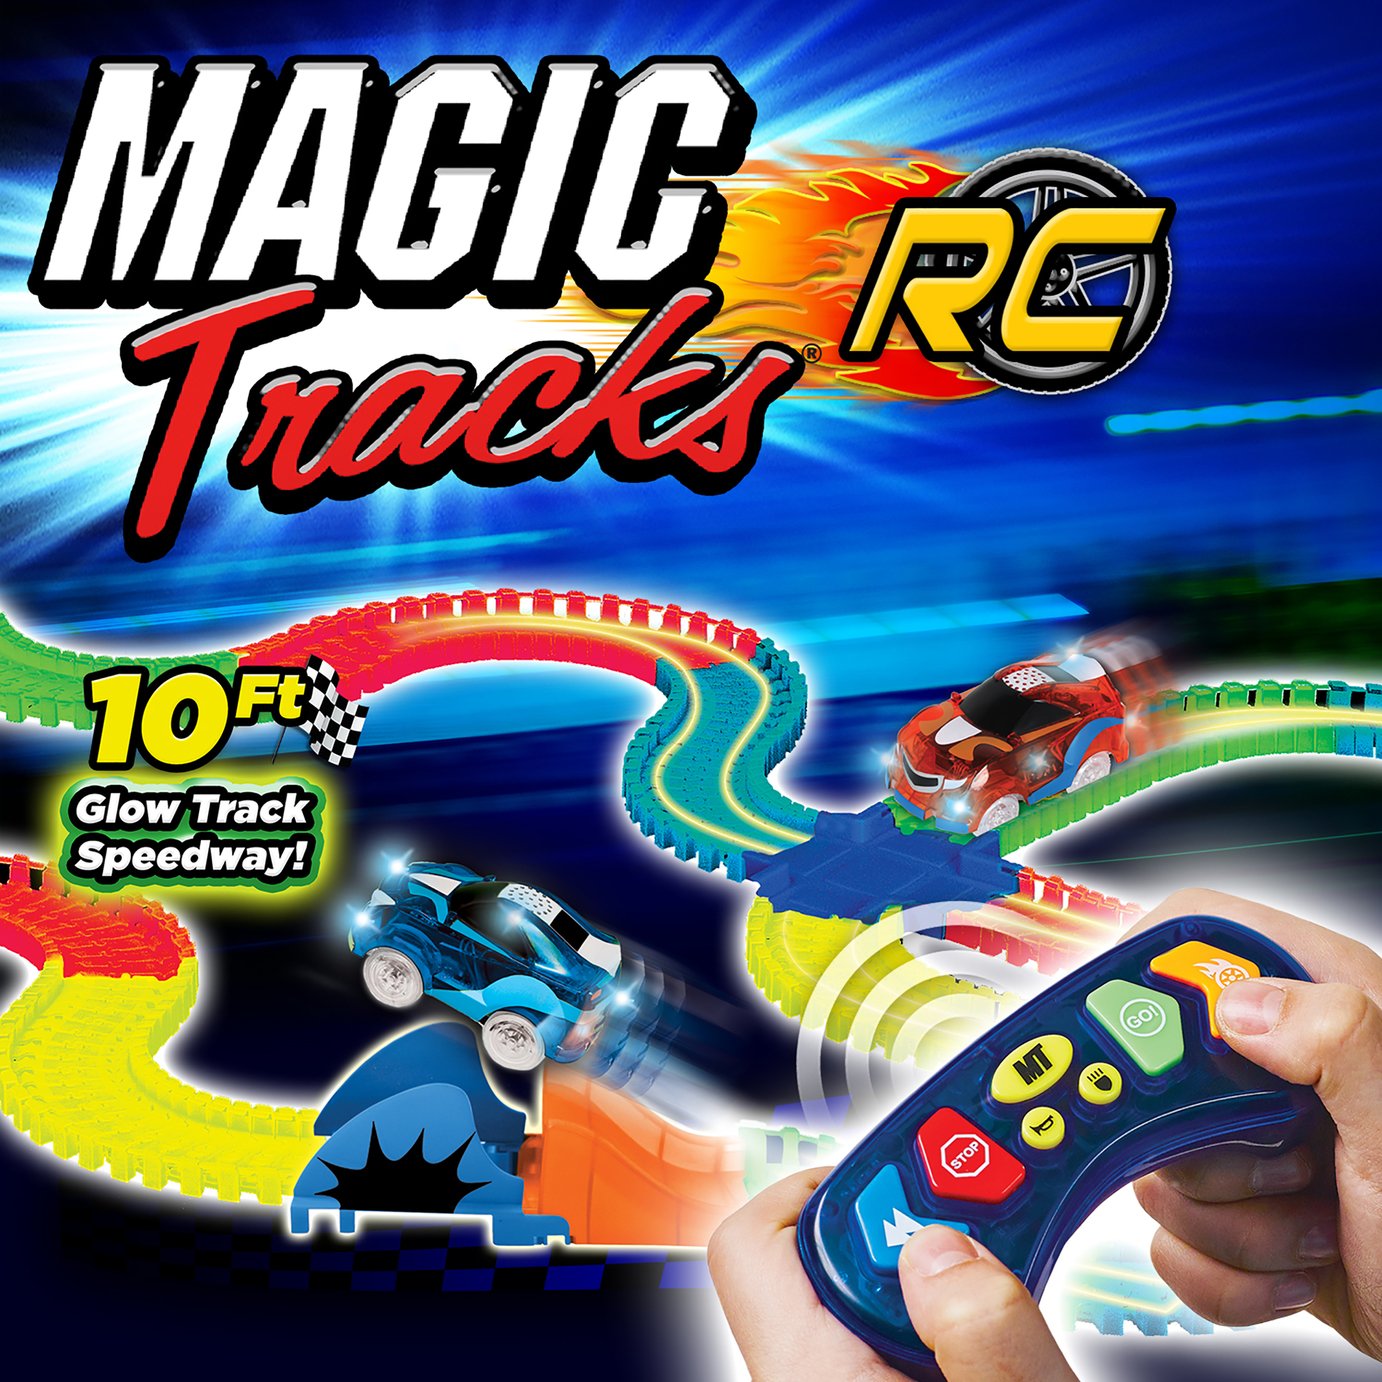 magic tracks turbo rc not working